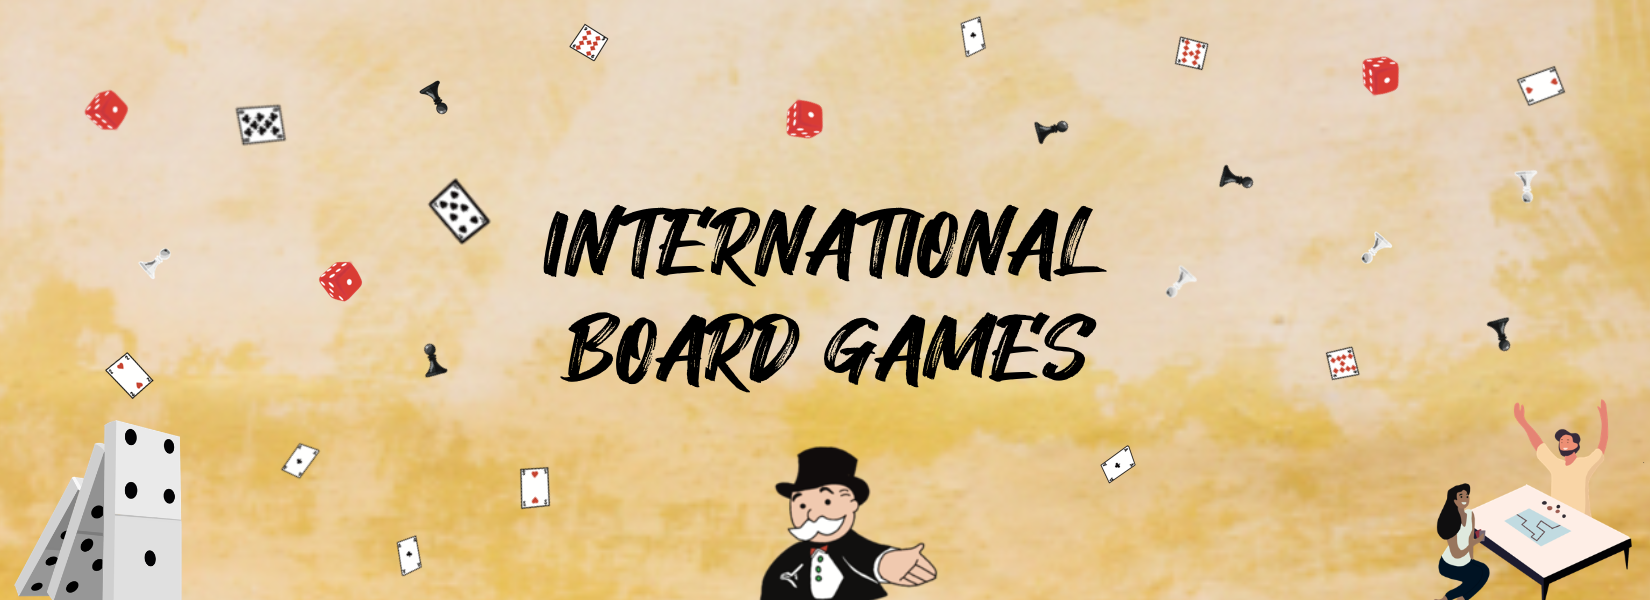 International board games event (Part.3)